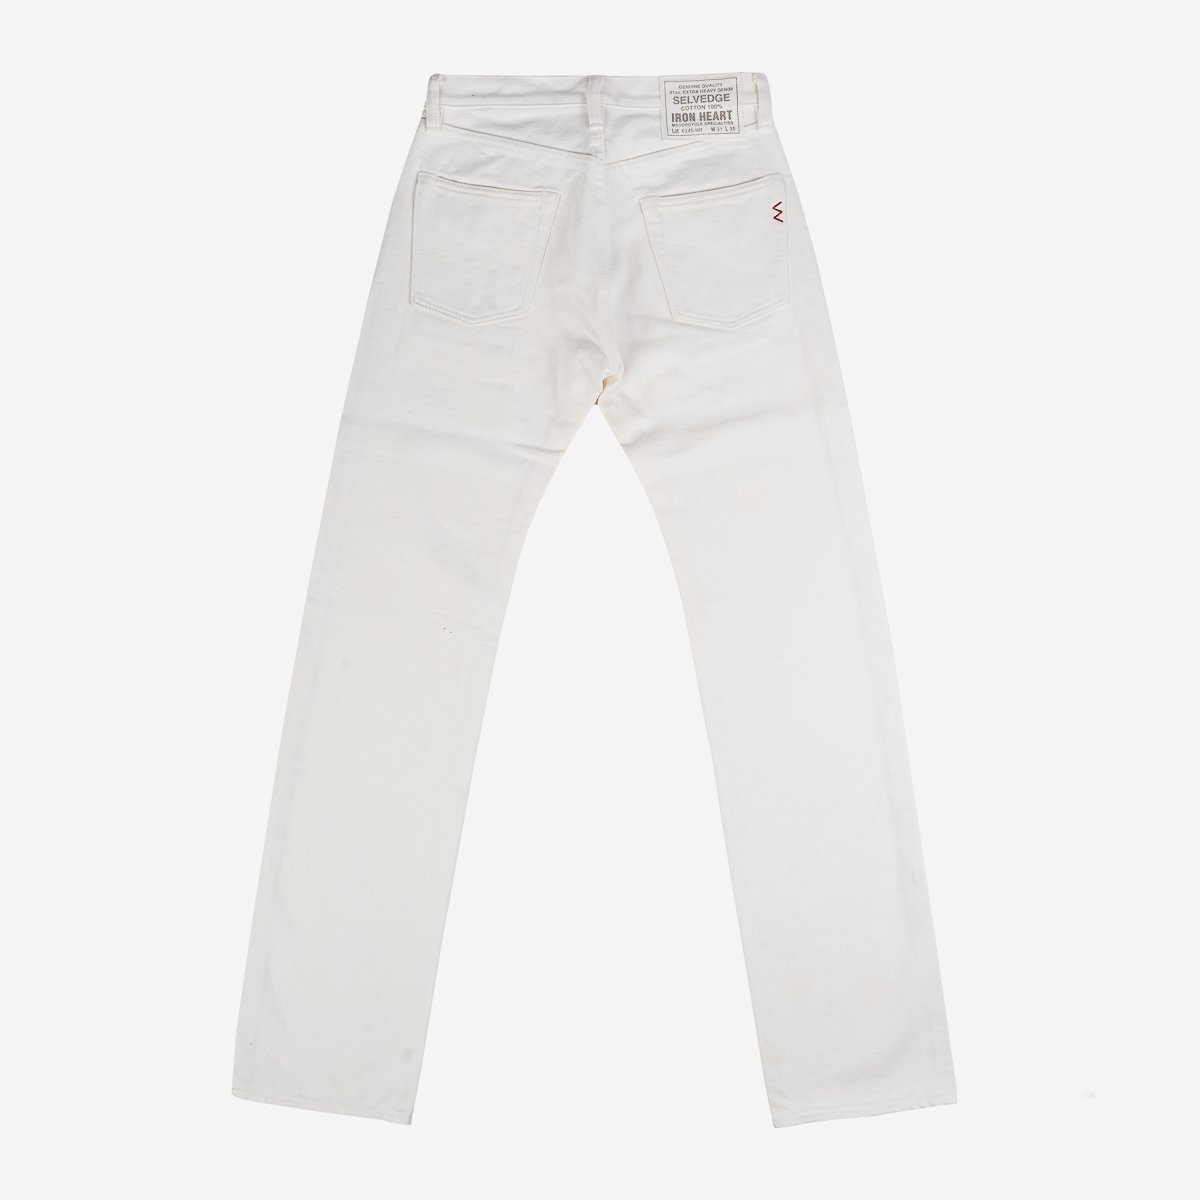 Iron Heart 21oz Selvedge Denim Straight Cut Jeans - White